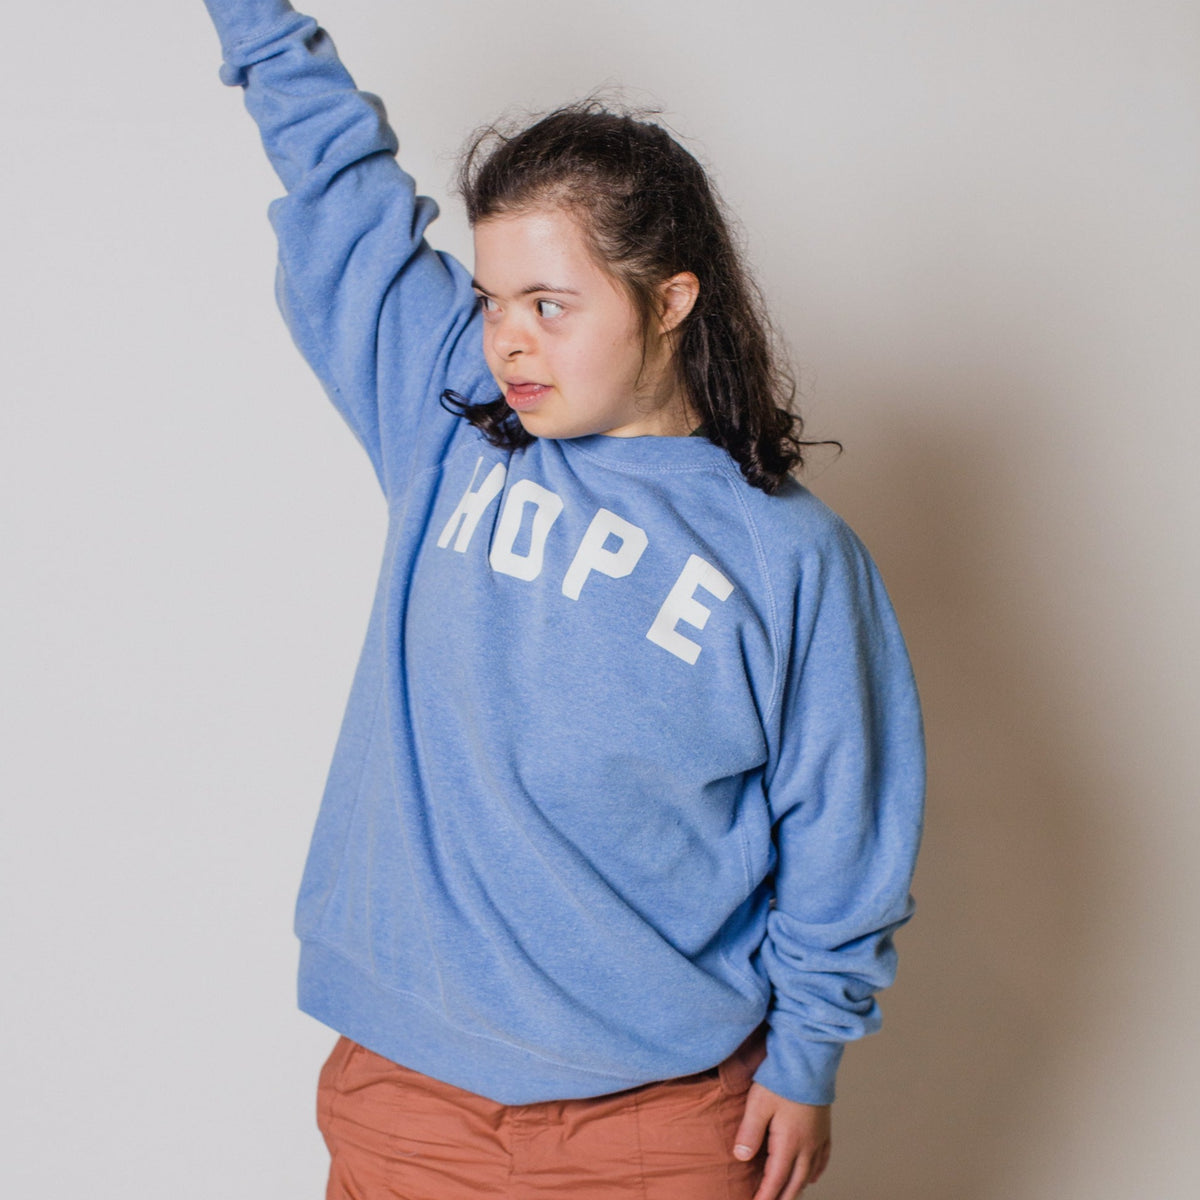 Blue Hope Sweatshirt